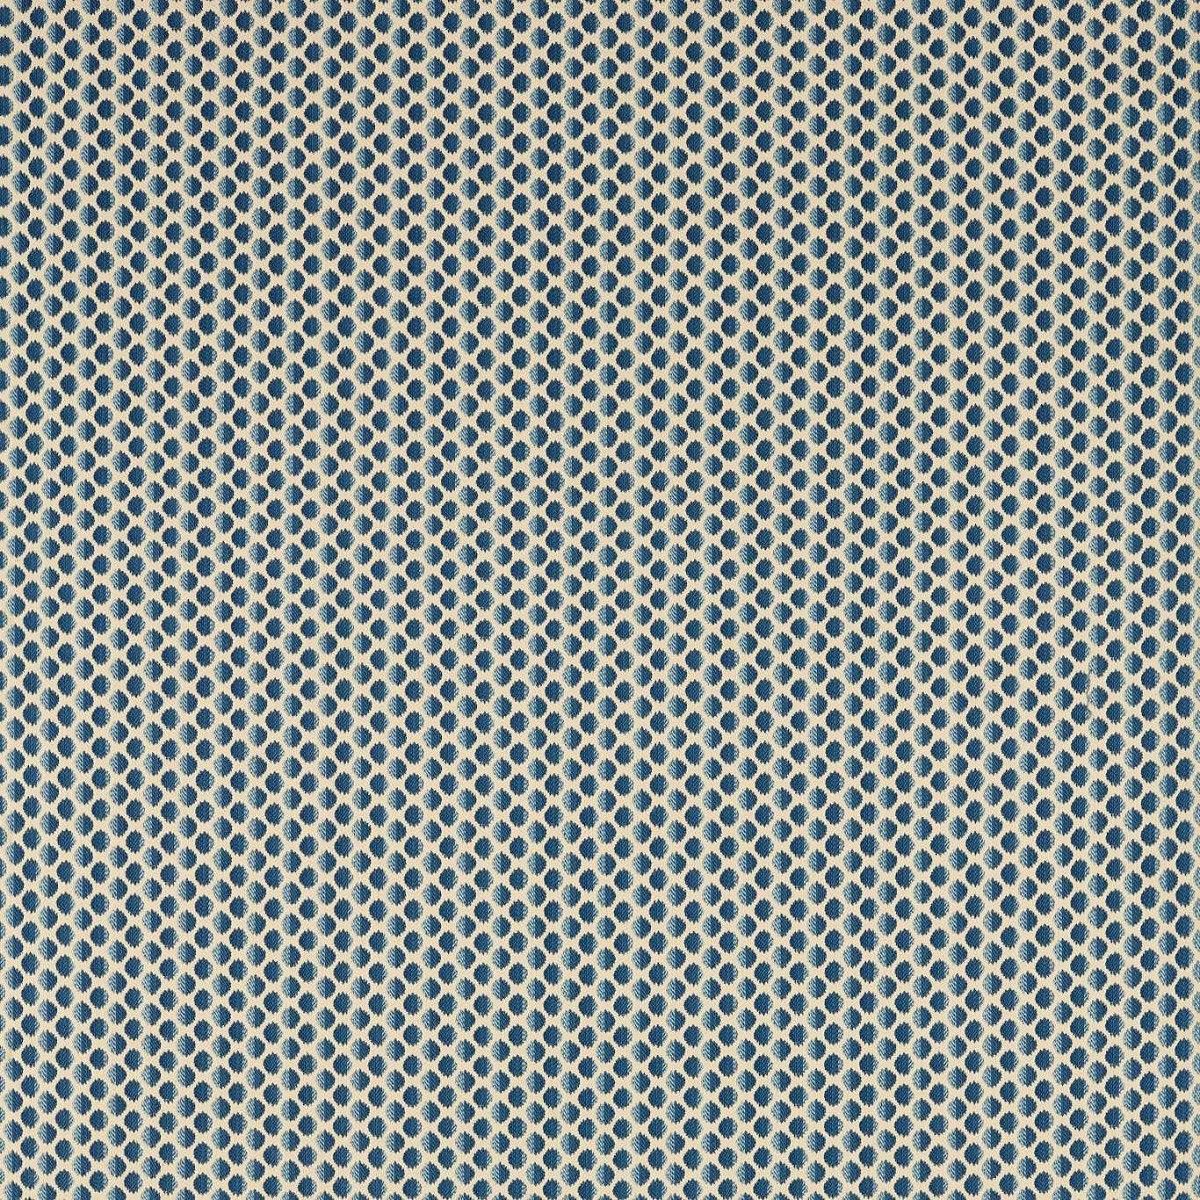 Seymour Spot Indigo Fabric by Zoffany